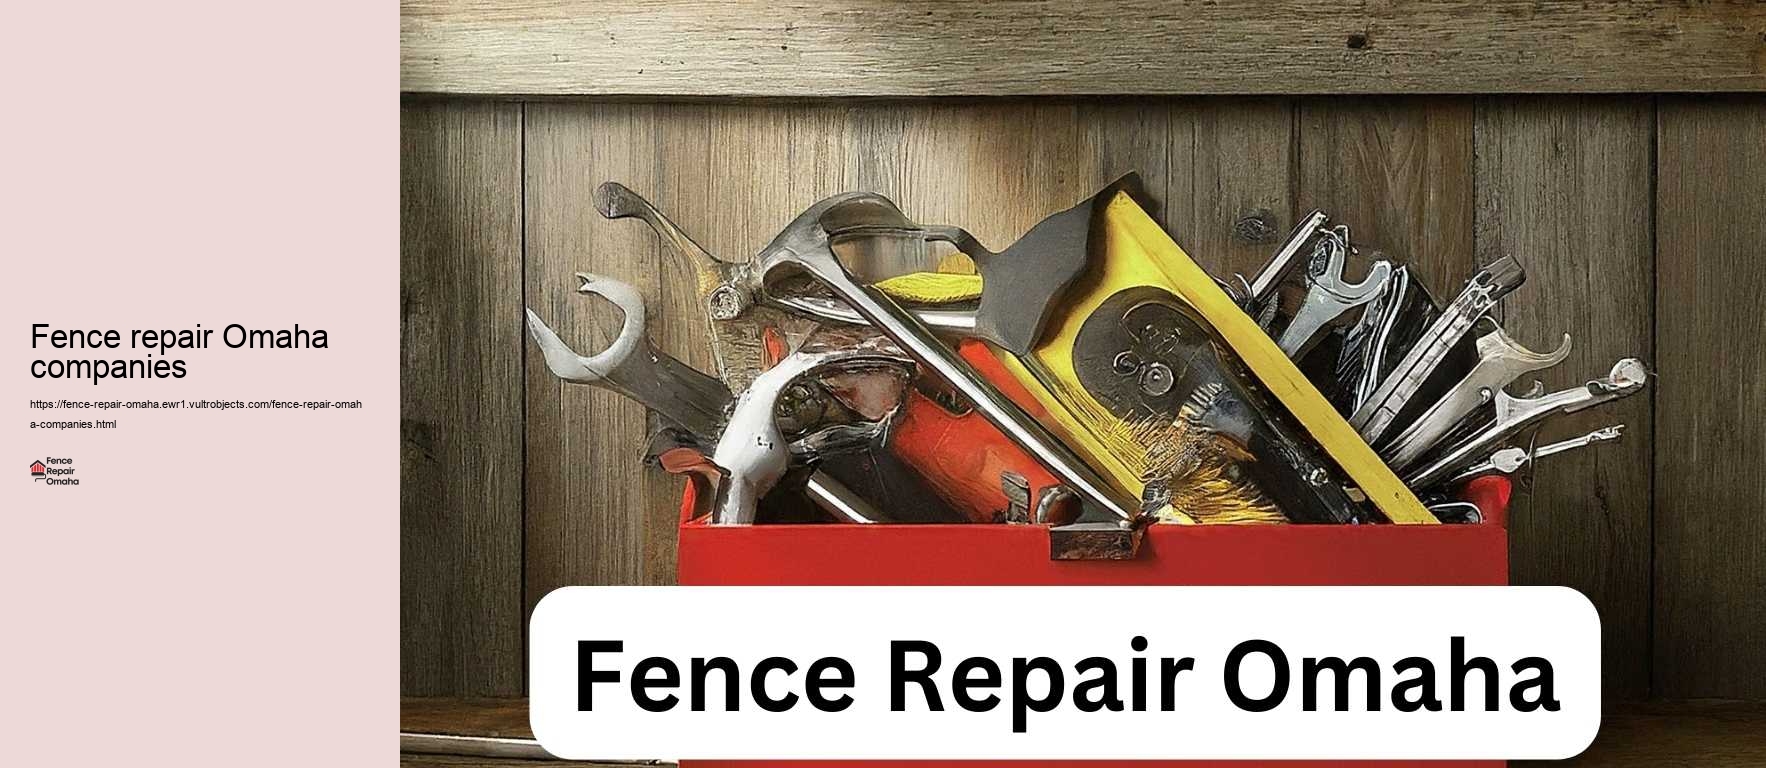 Fence repair Omaha companies